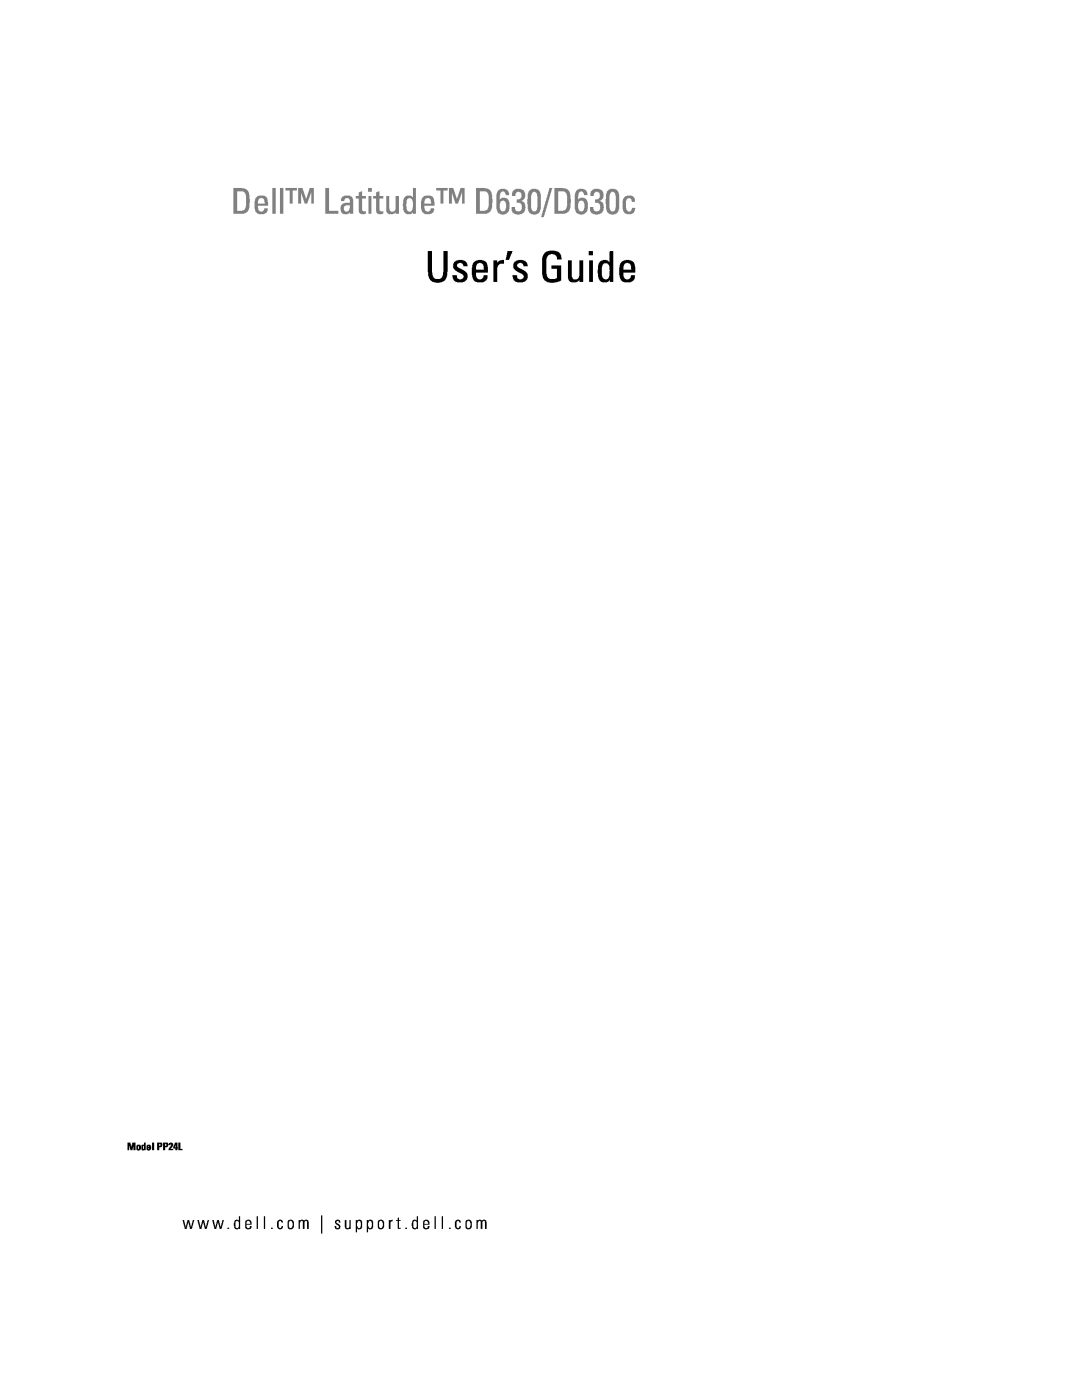 Dell manual User’s Guide, Dell Latitude D630/D630c, Model PP24L 